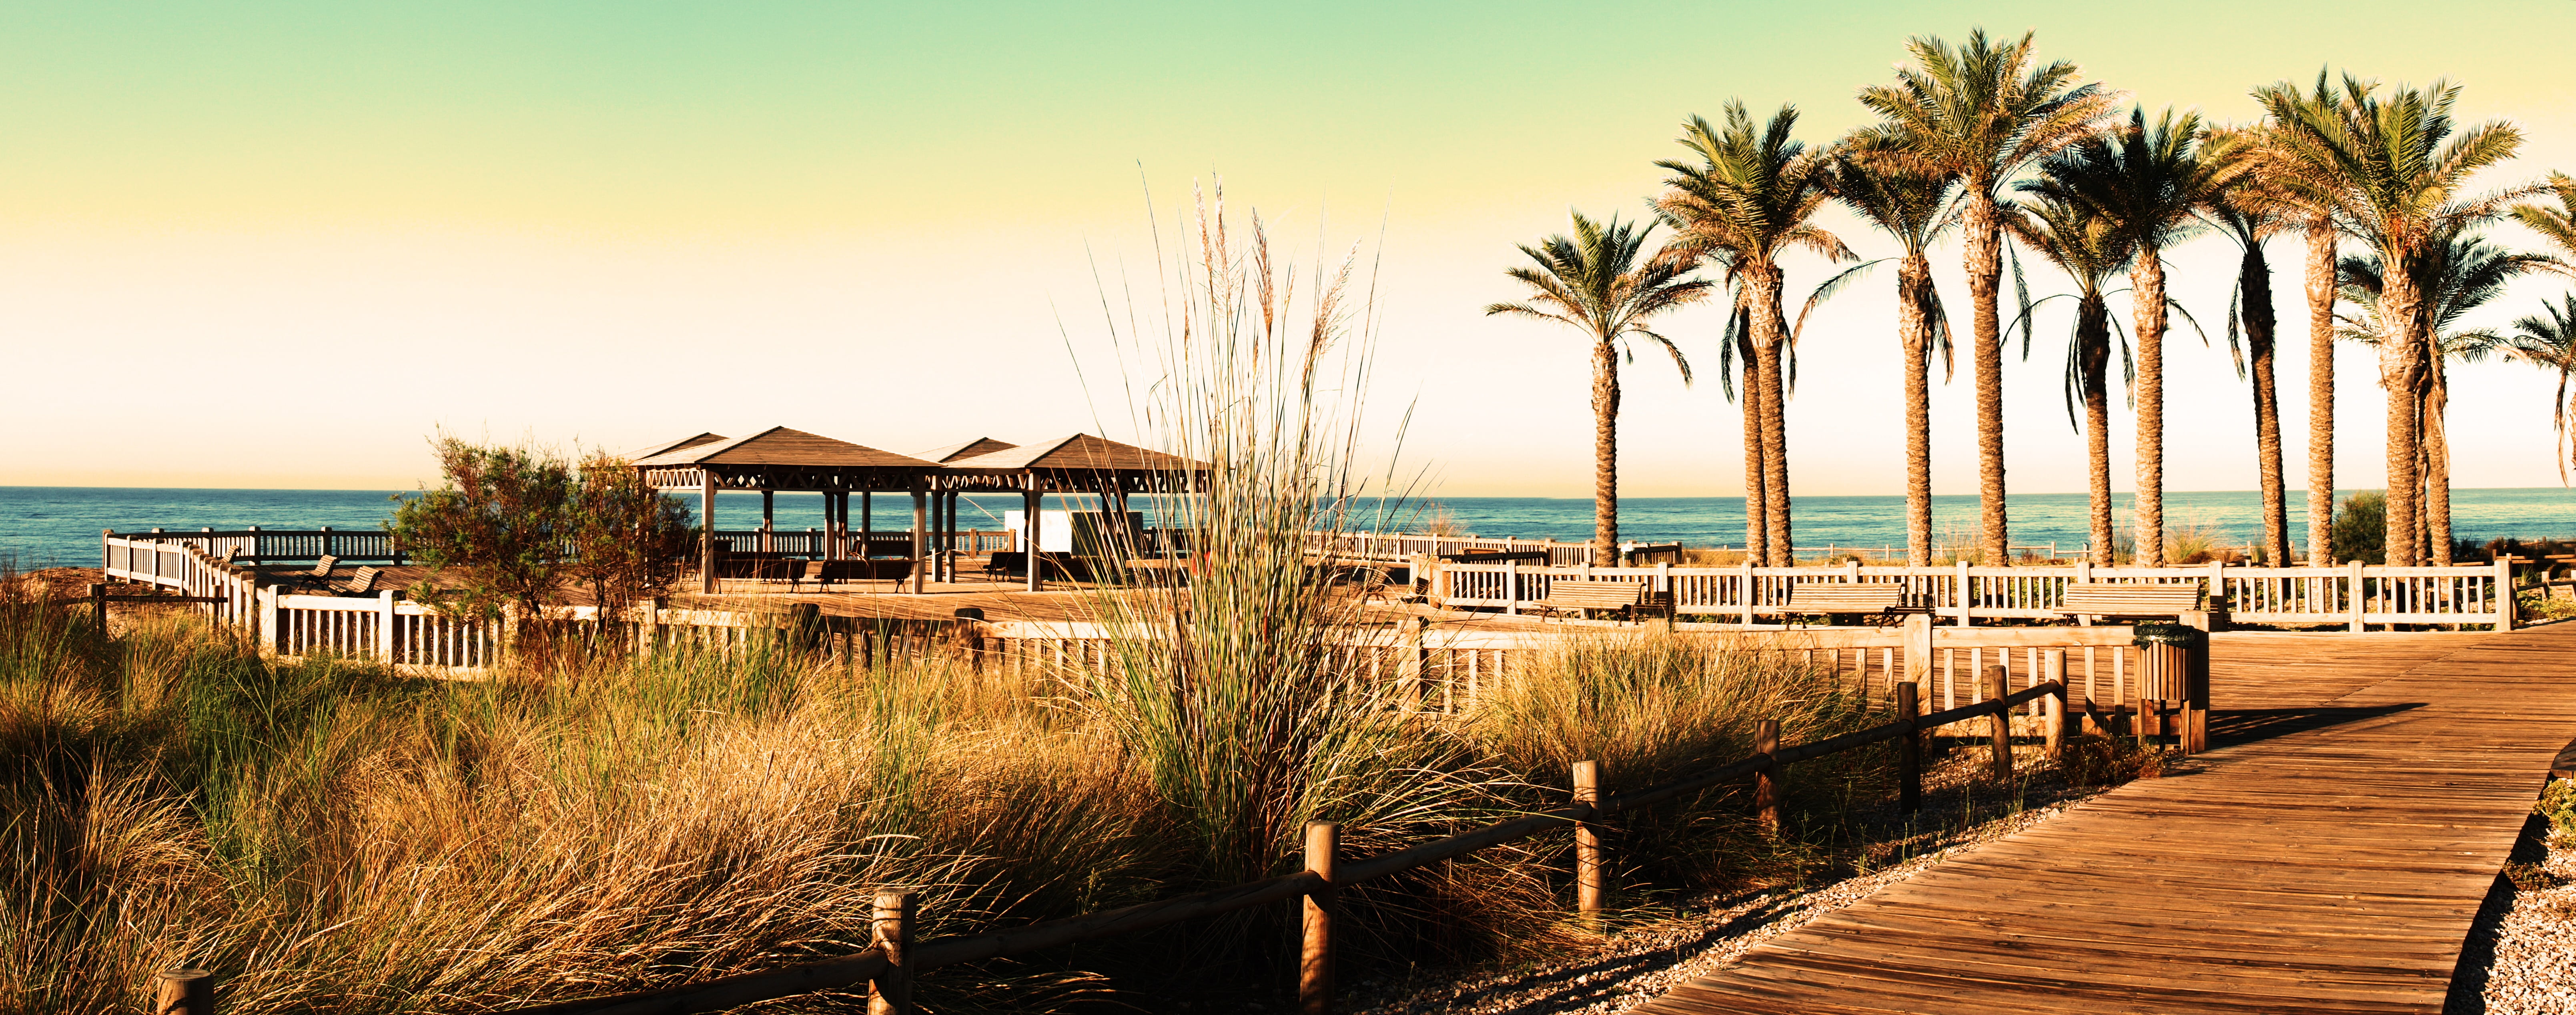 toyo, park, almeria, andalusia, spain, palms, wood, beach, sea